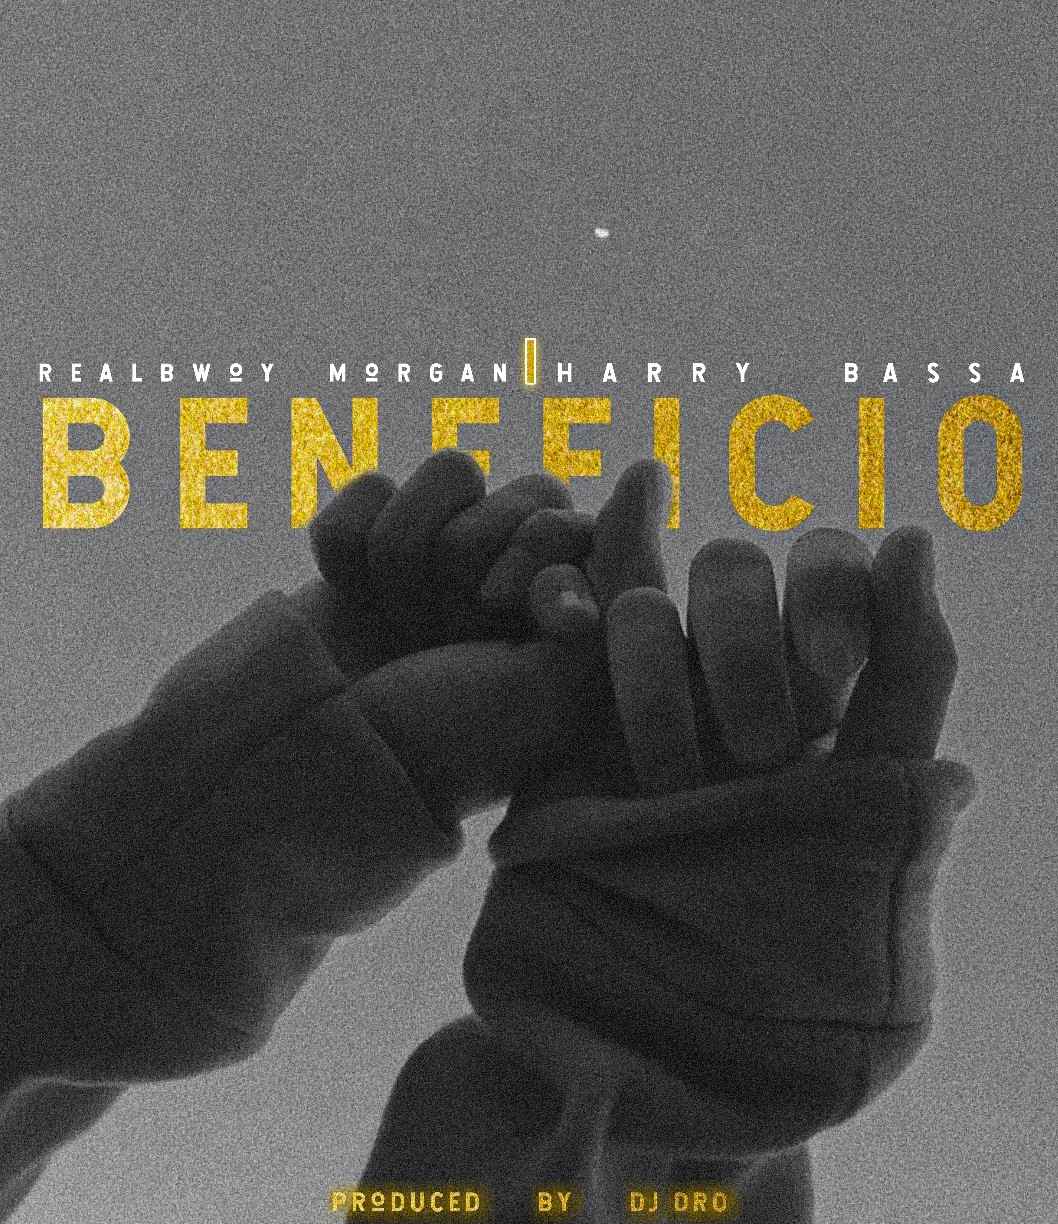 RealBwoy Morgan ft. Harry Bassa – “Beneficio” (Prod. By DJ Dro)